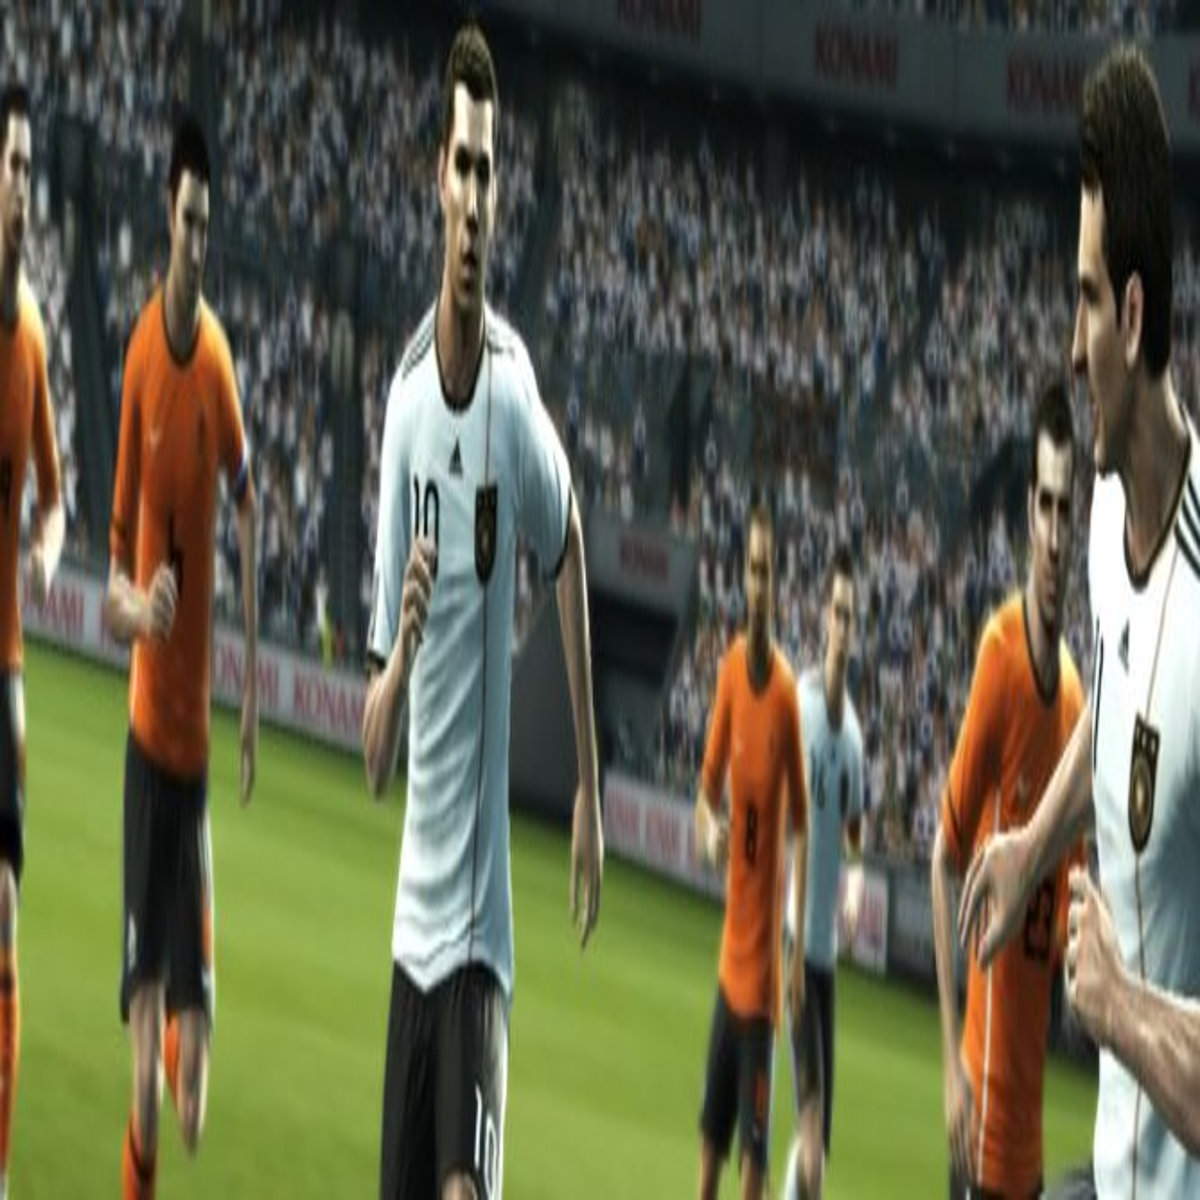 Jogo Pro Evolution Soccer 2012 (pes 12) - psp